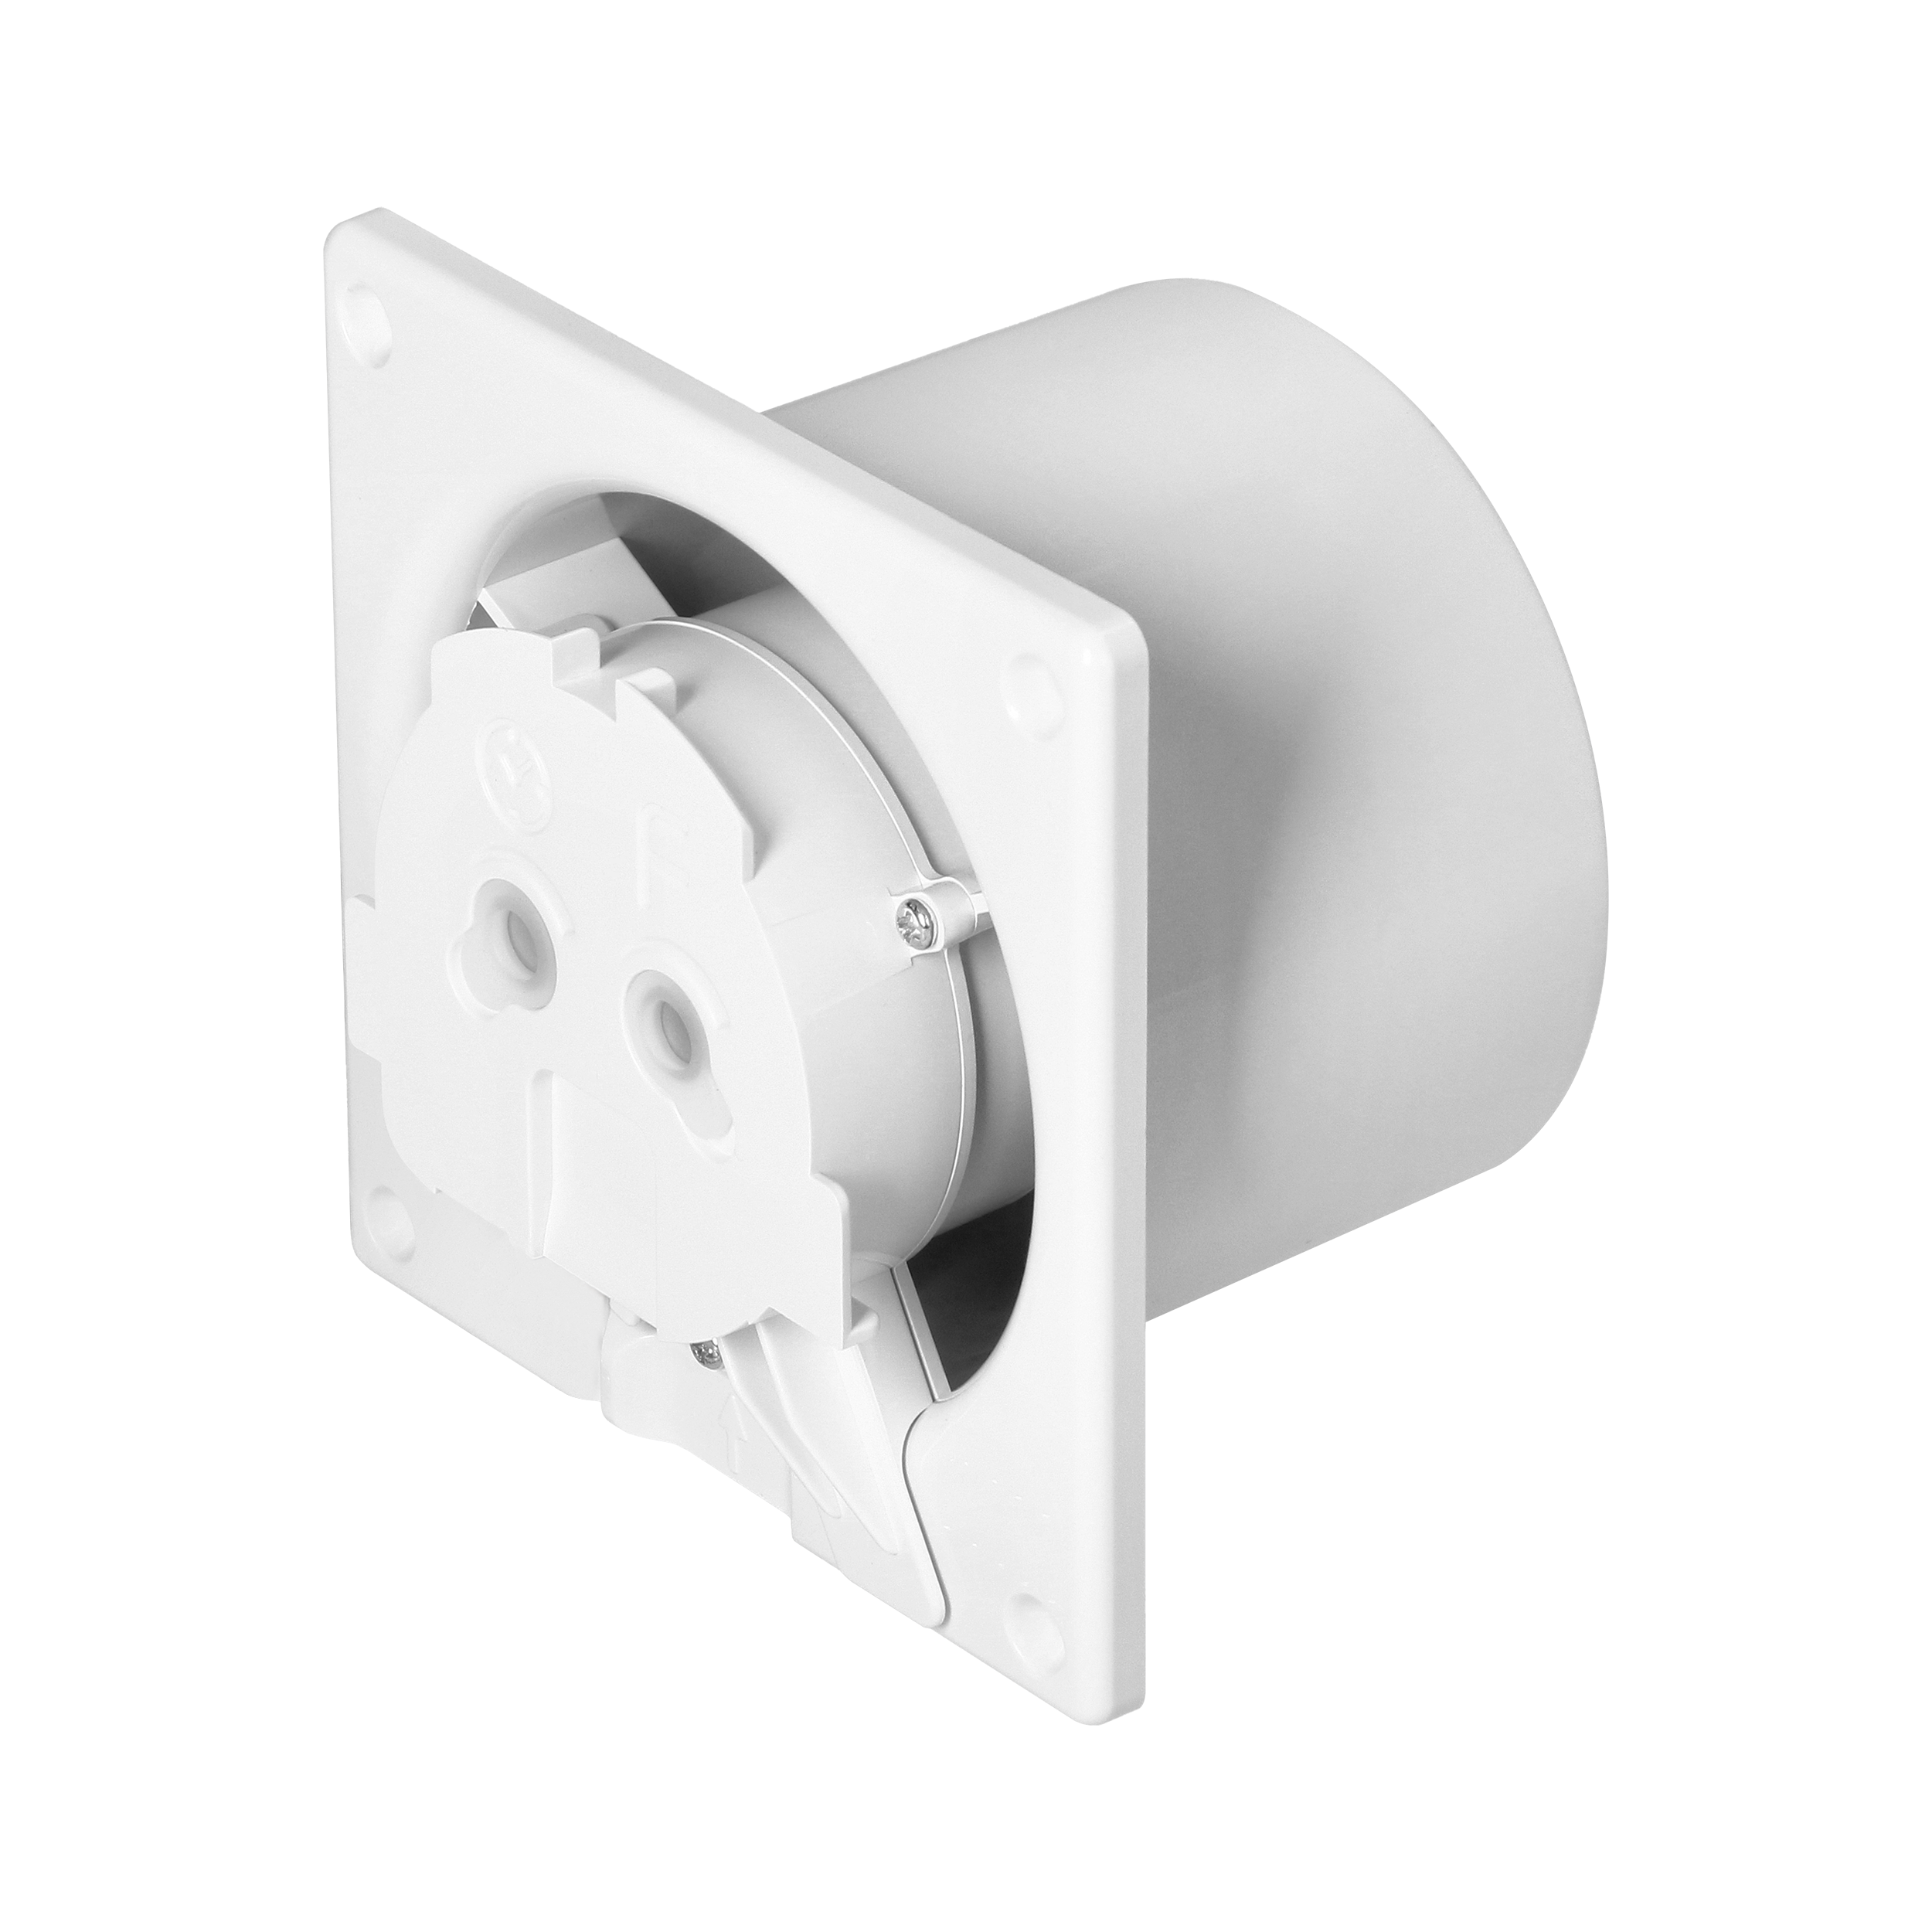 Bathroom fan 100mm - Premium - Standard with ball bearings